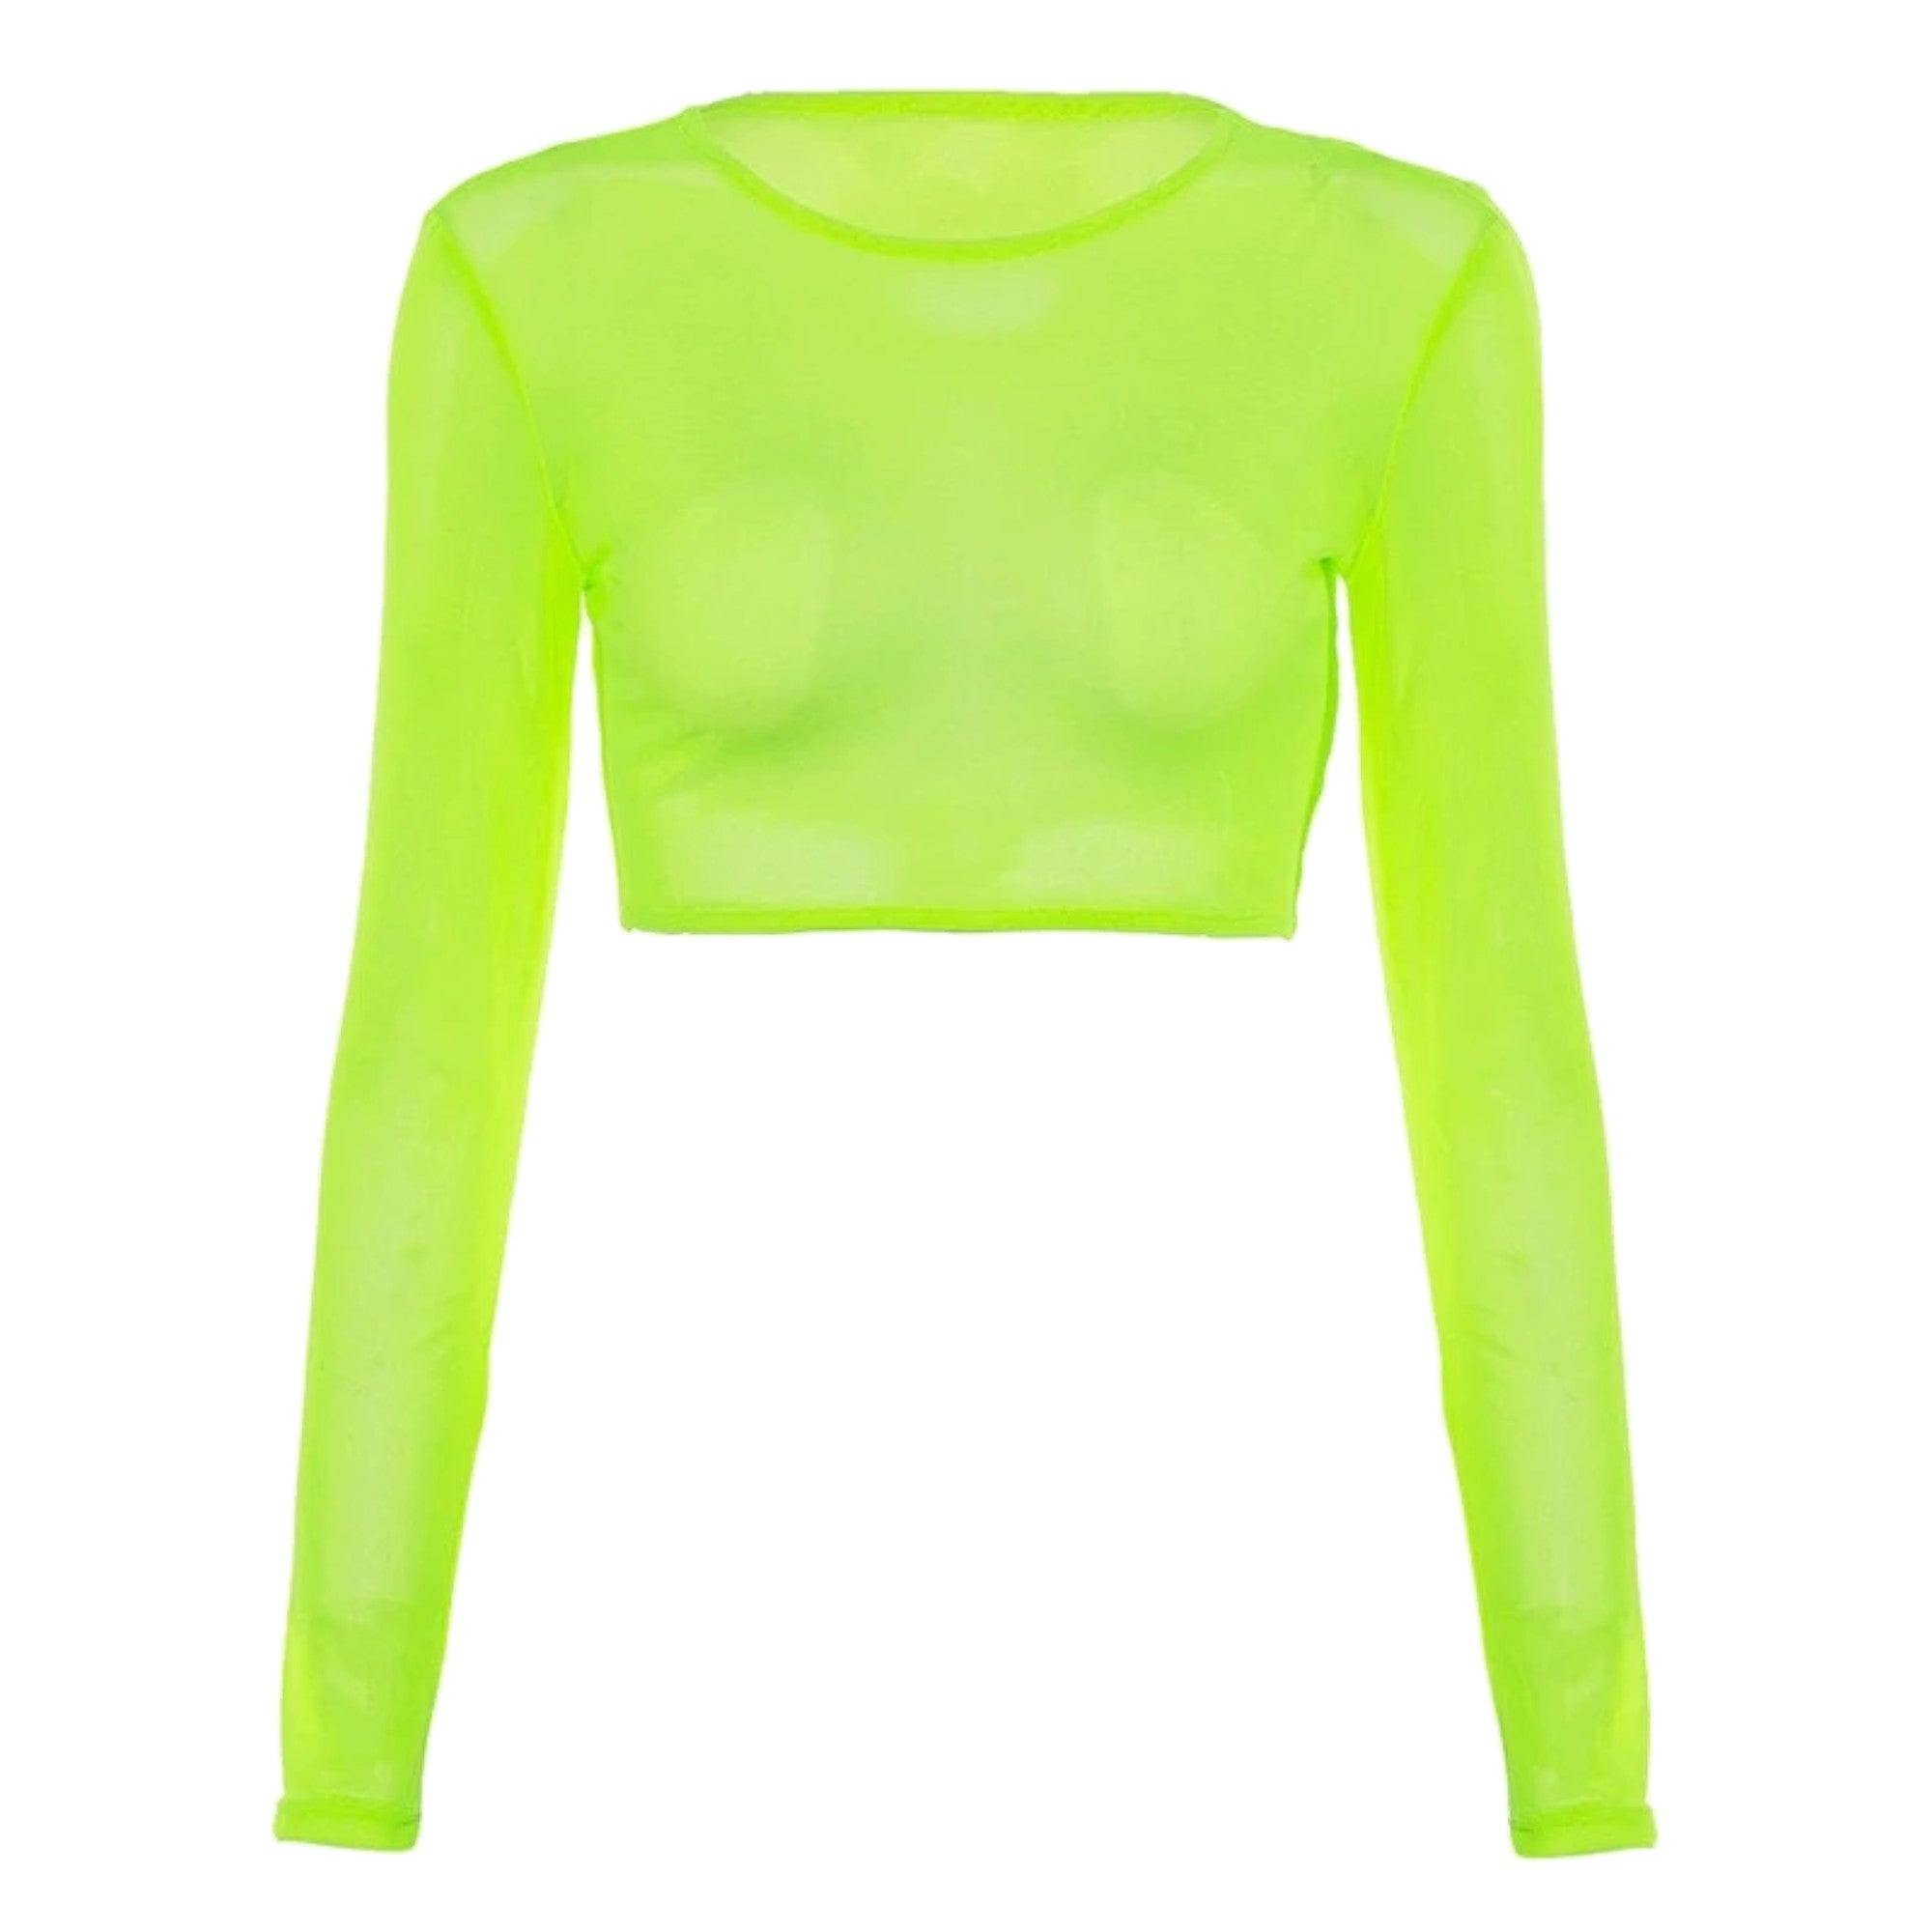 QOS Mesh Crop Top 3pc Bikini - Neon Green/Yellow